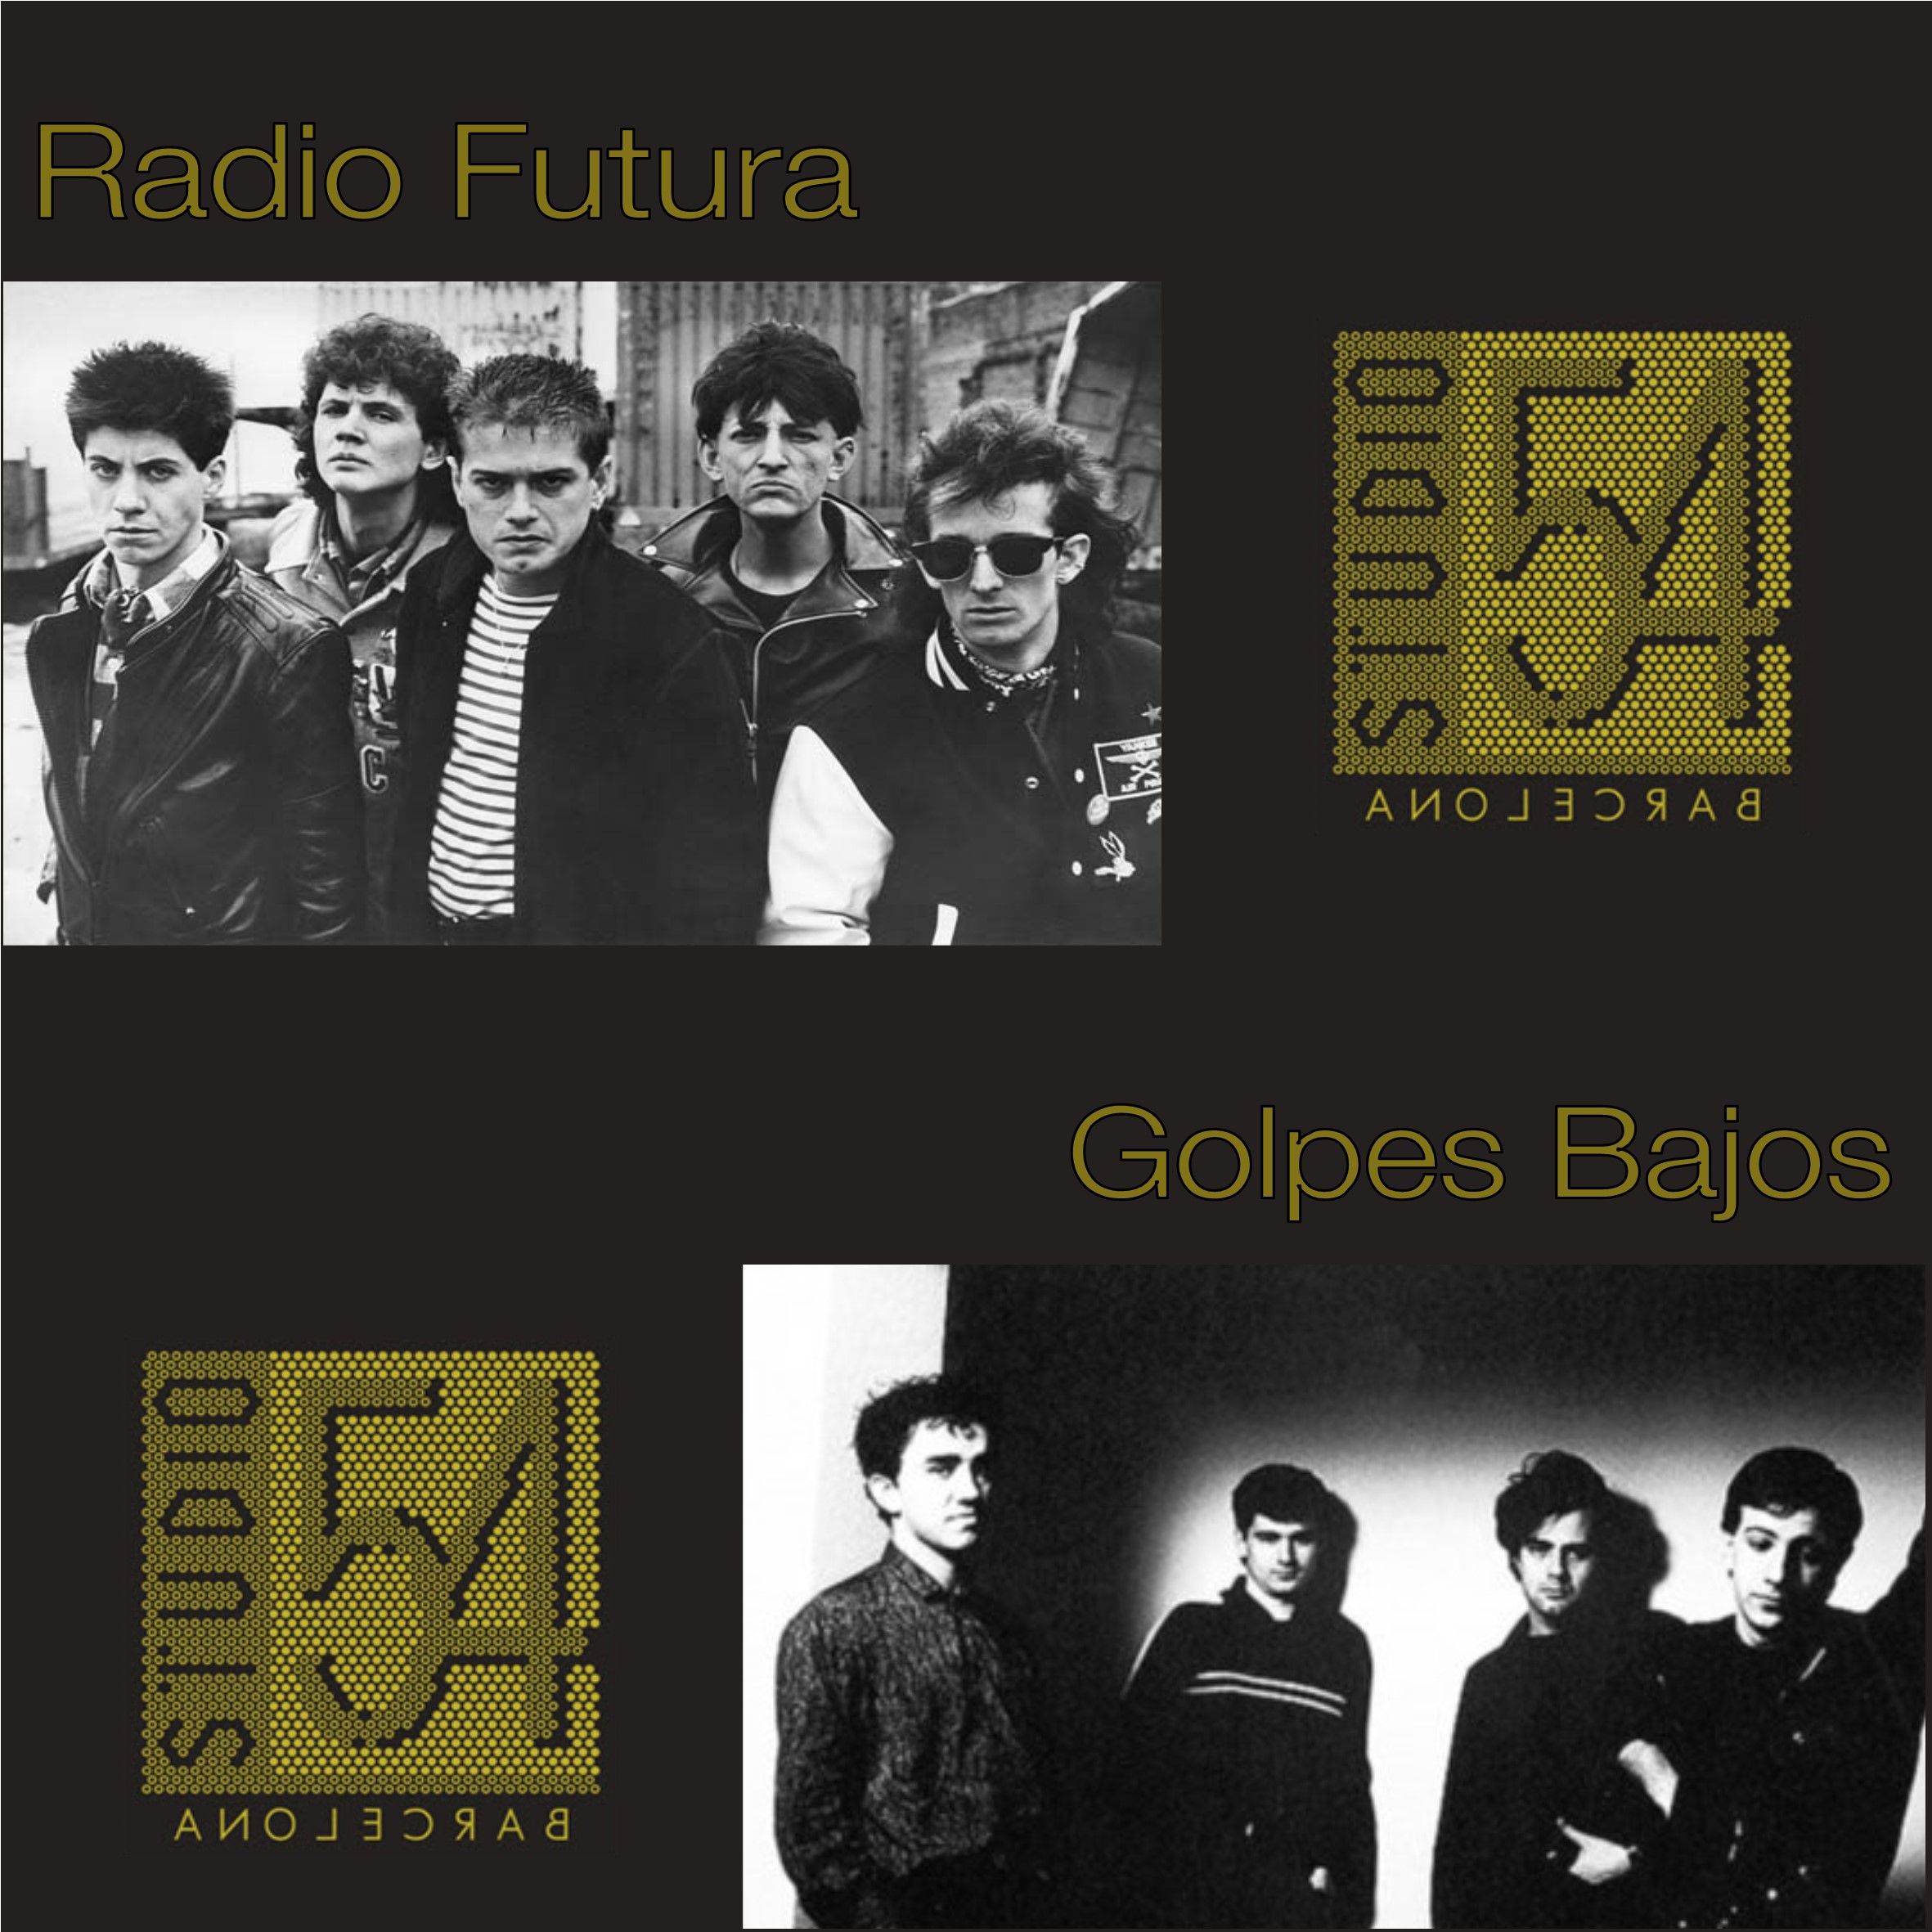 Radio Futura - Golpes Bajos - Topdsico Radio - Studio 54 Barcelona